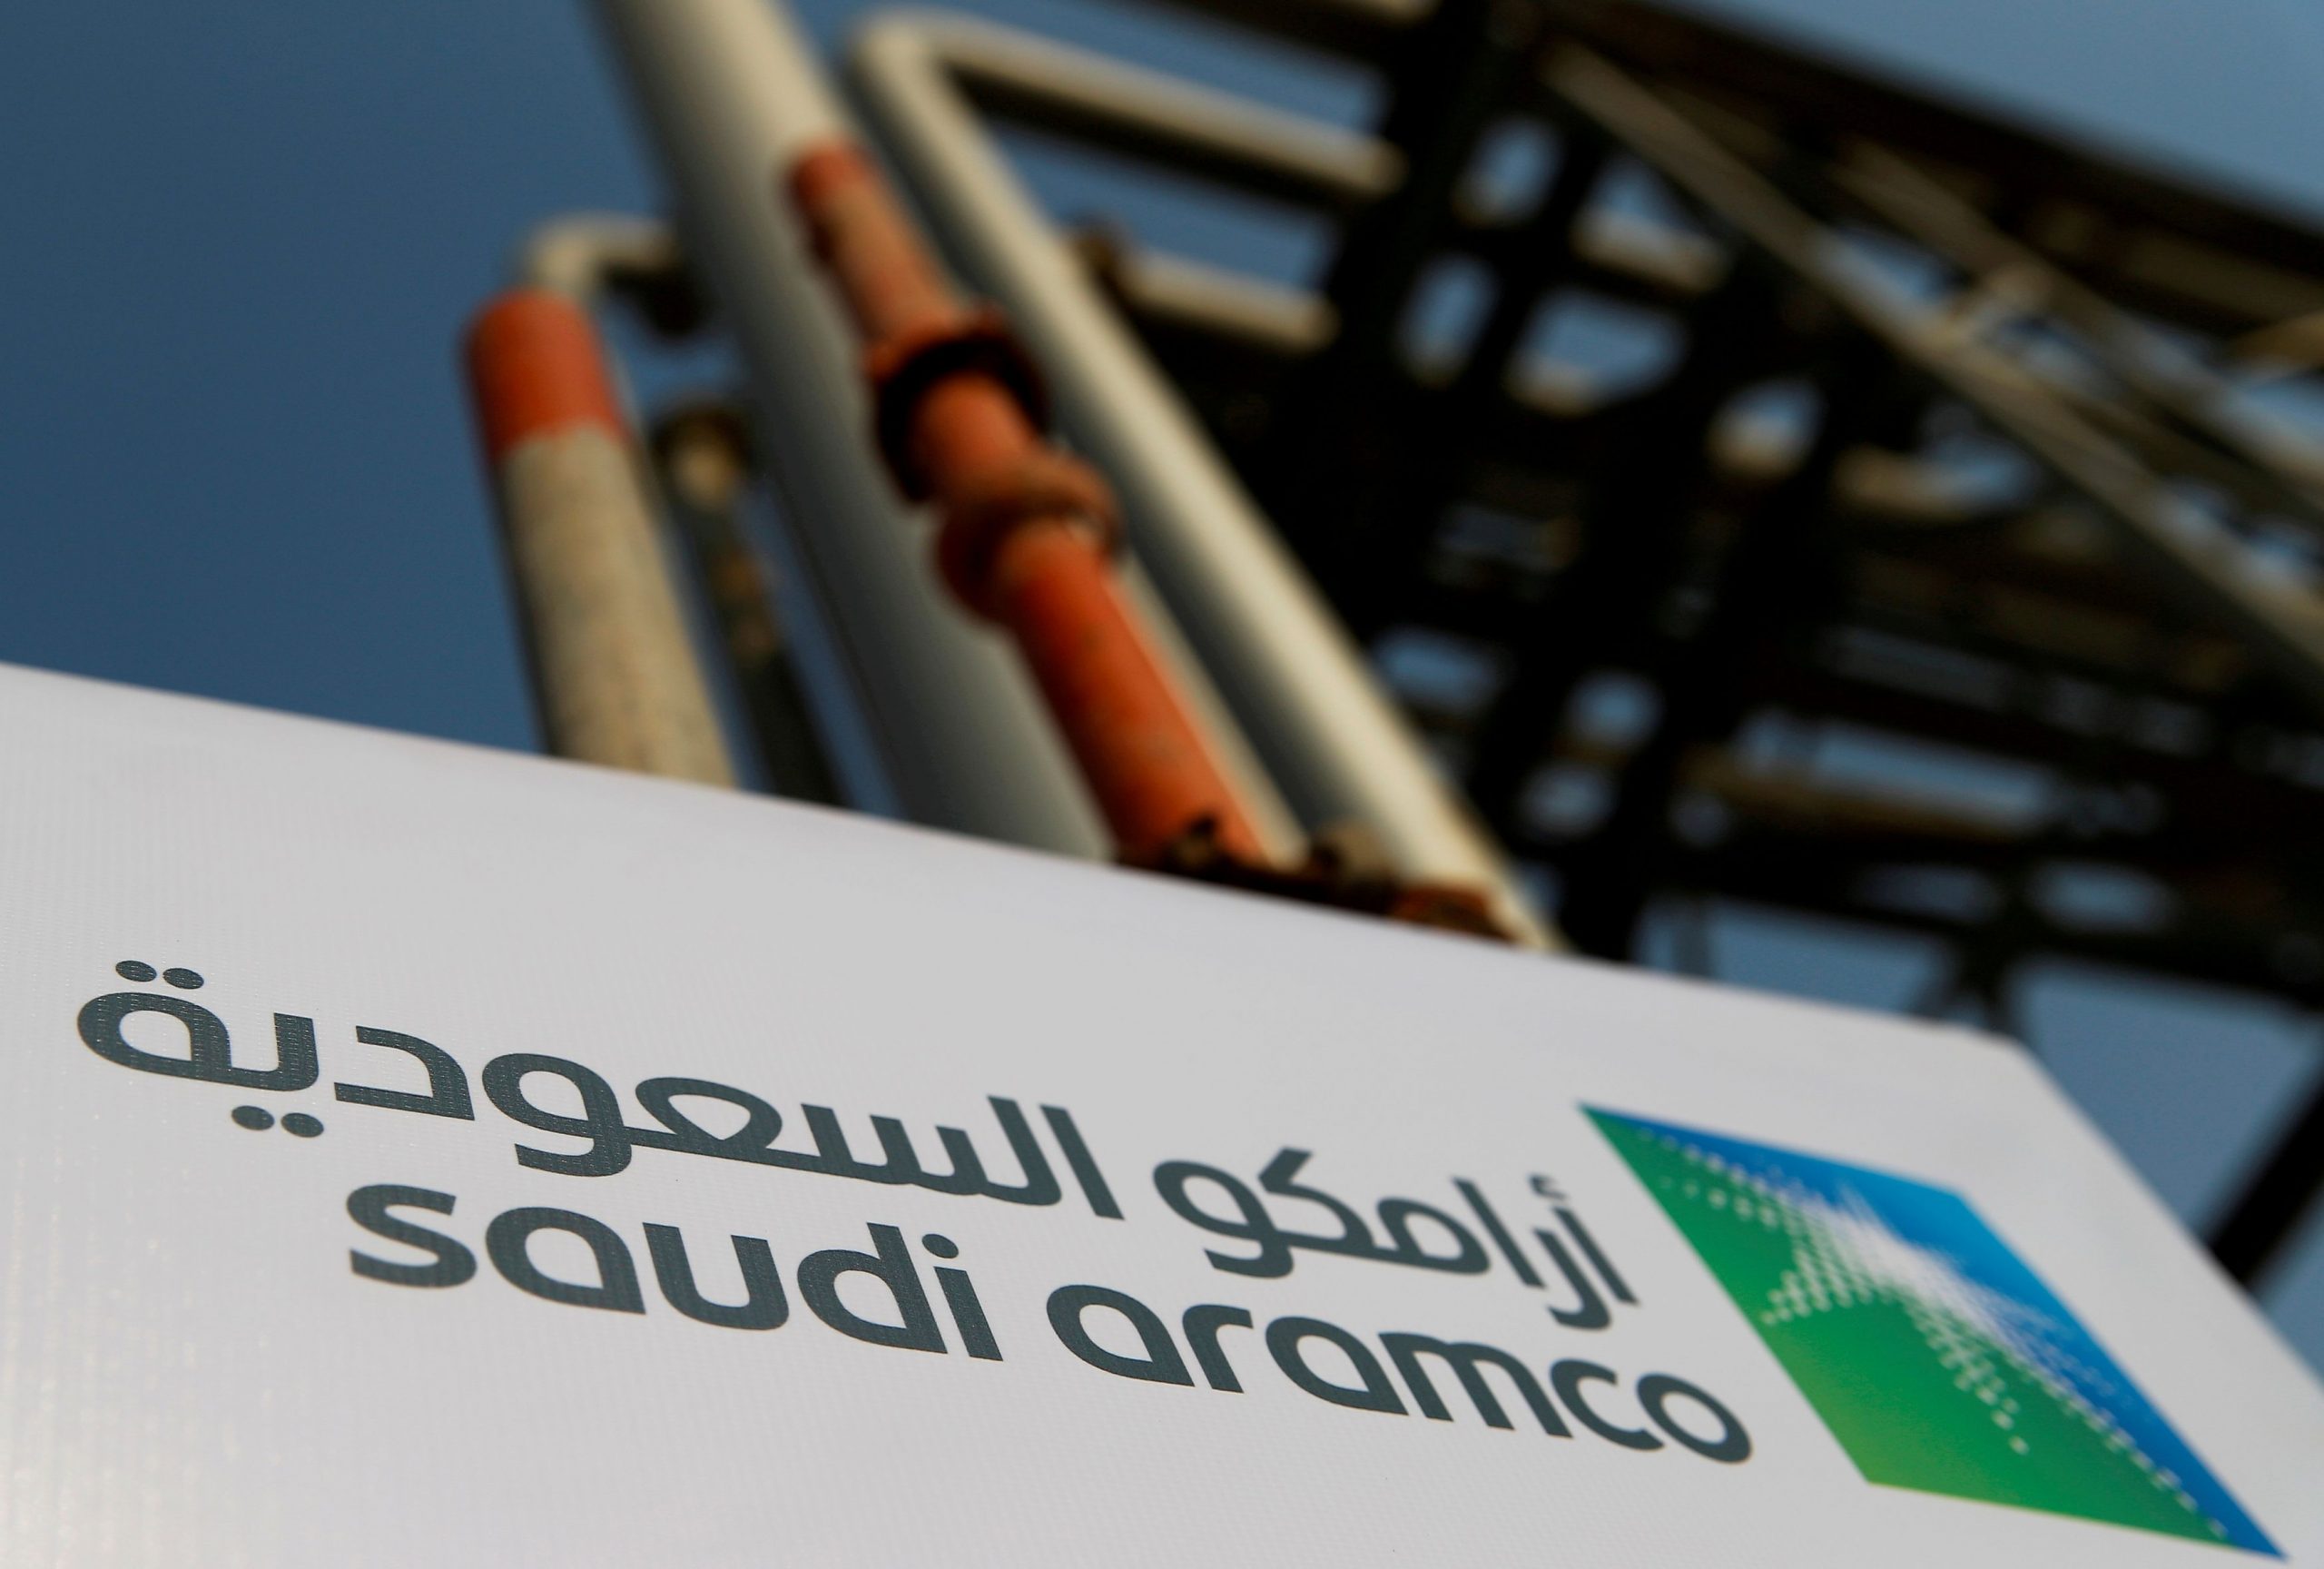 Aramco: Σε επίπεδα ρεκόρ η μετοχή της, καθώς οι προοπτικές για τον πετρελαϊκό κλάδο φαντάζουν ρόδινες